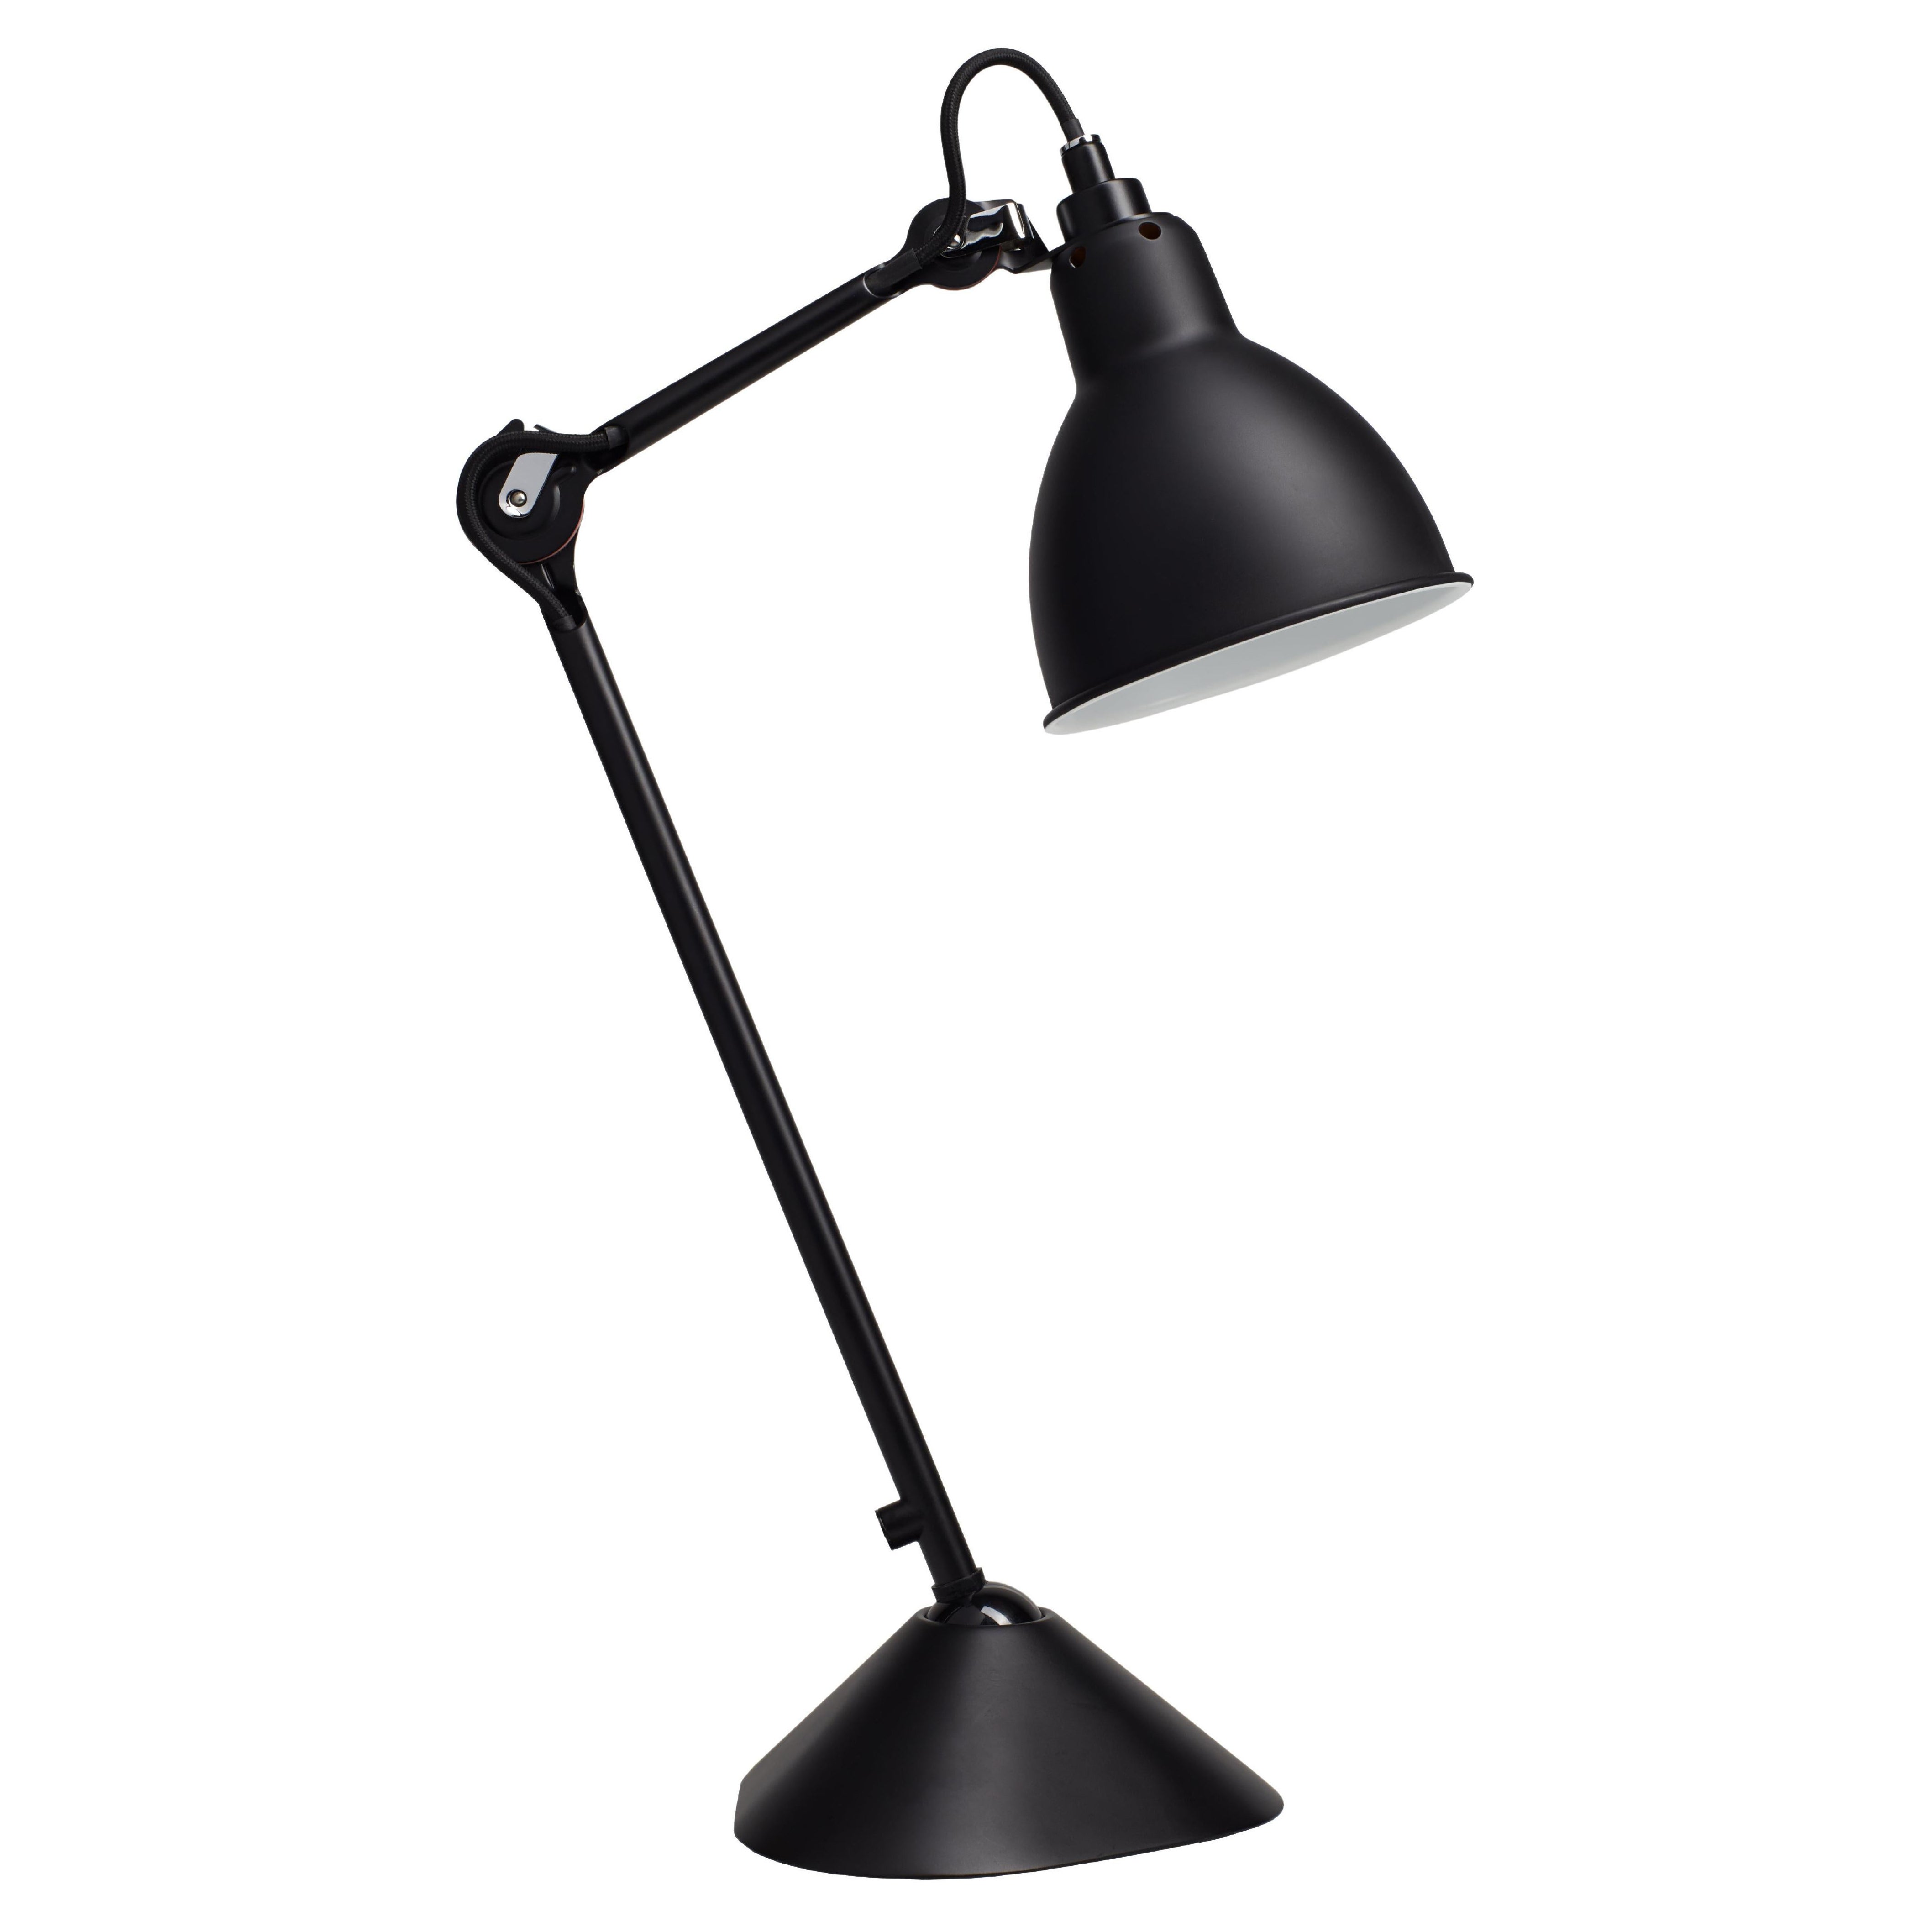 Black Lampe Gras N° 205 Table Lamp by Bernard-Albin Gras